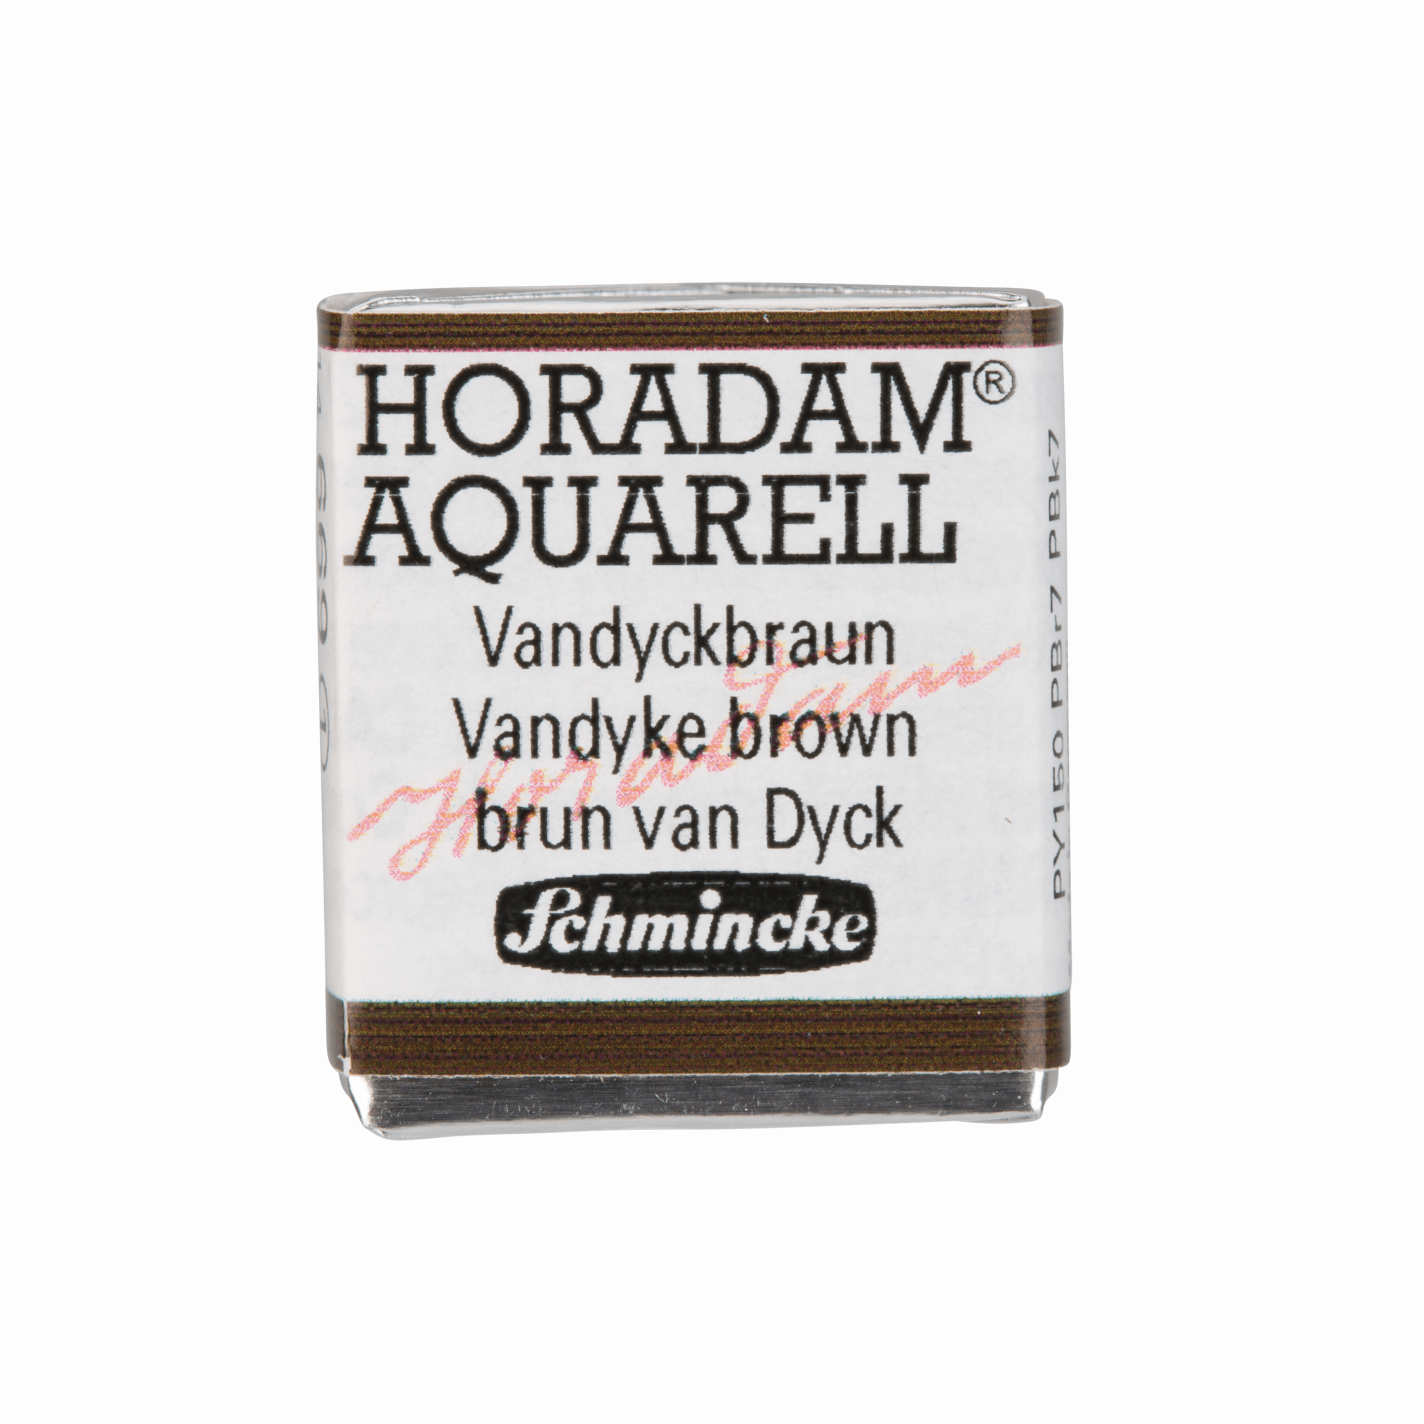 Schmincke Horadam Aquarell pans 1/2 pan Vandyke Brown